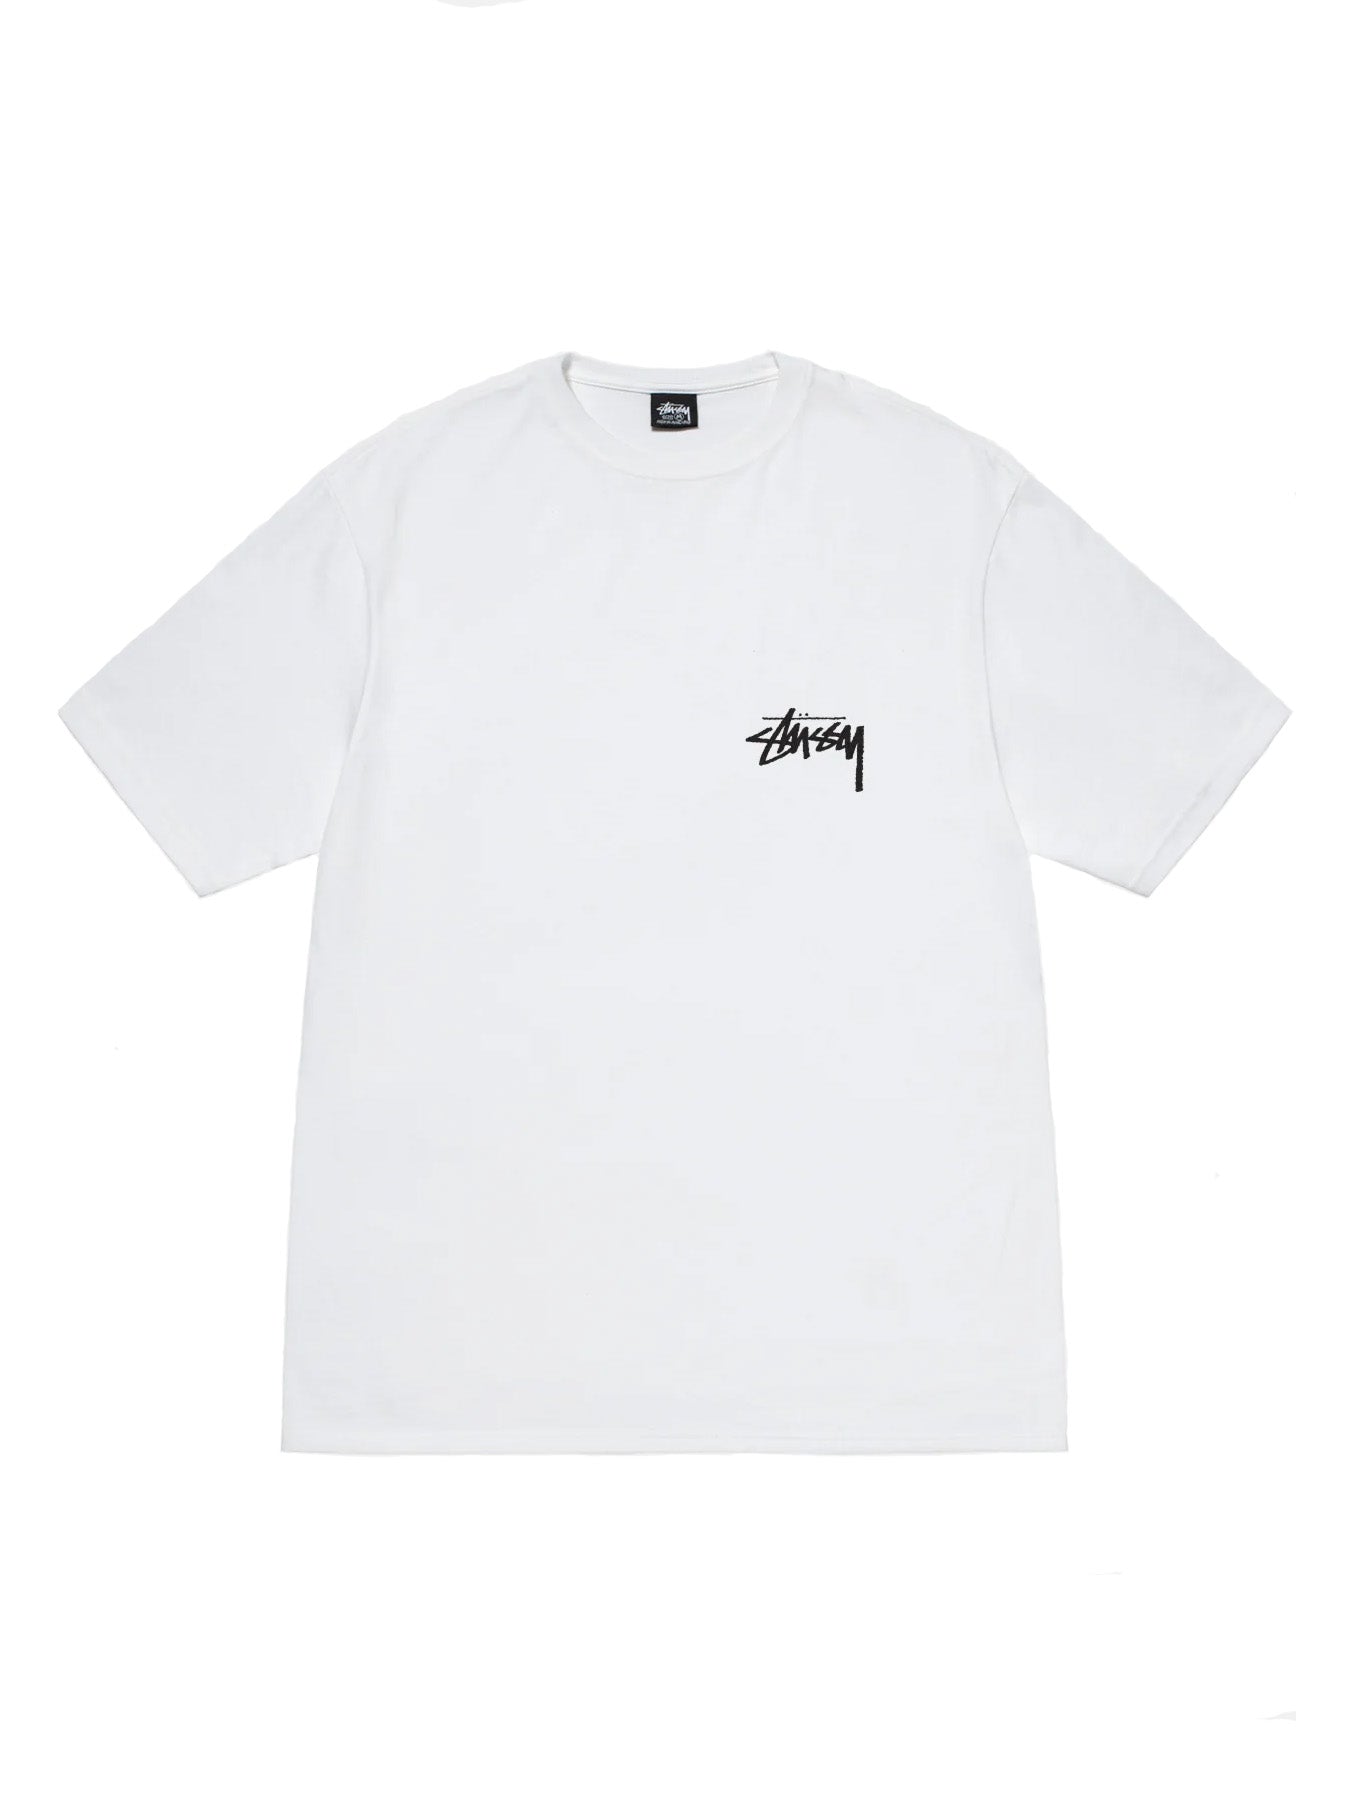 Stussy Dice Dot T-Shirt White